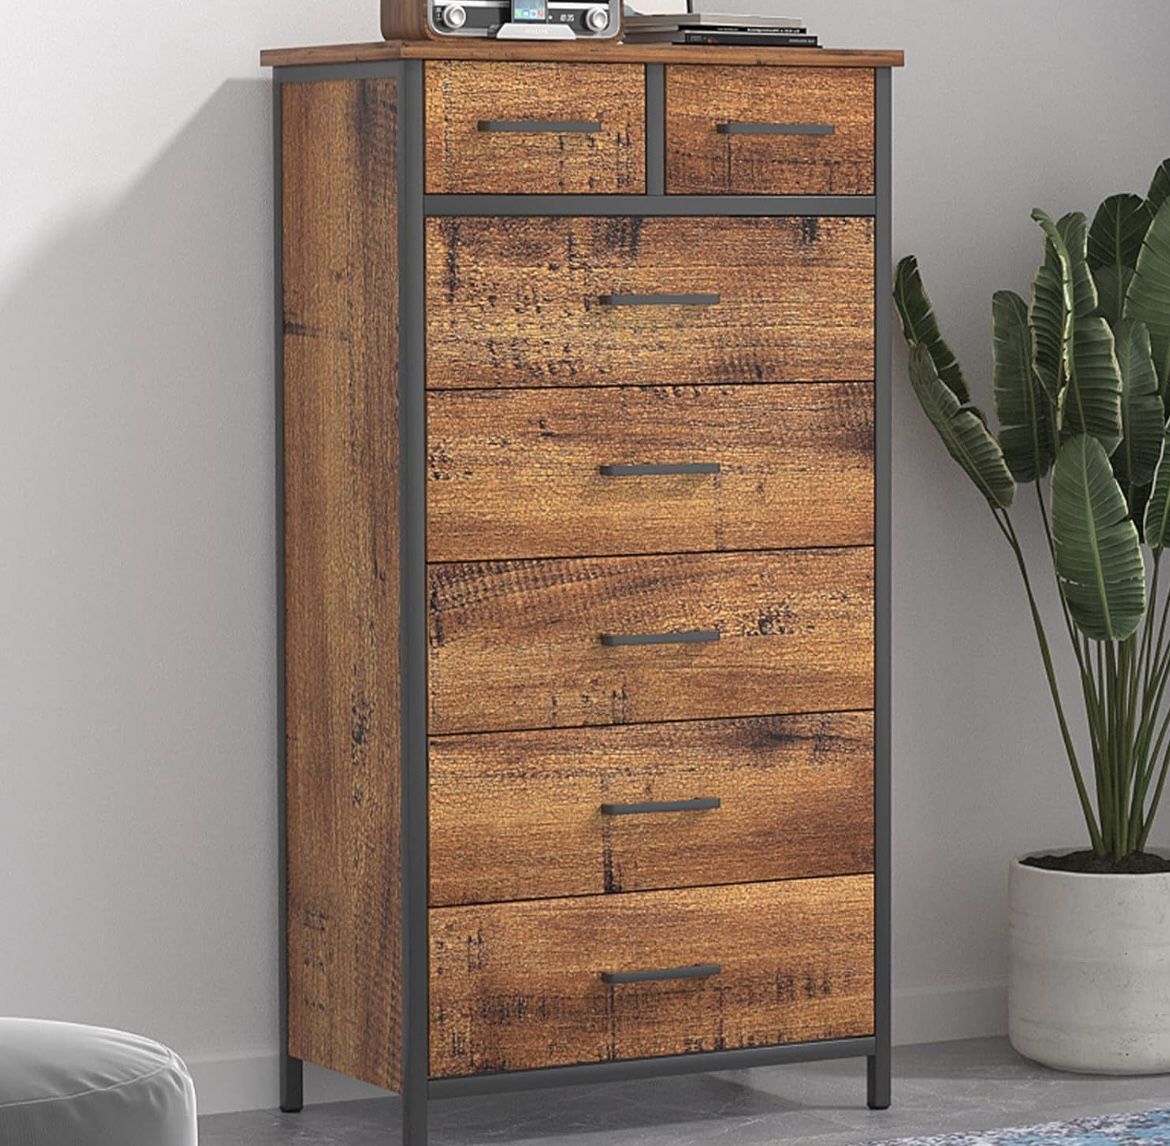 7 Drawer Tall Dresser, Industrial Wood Storage Clothes Organizer, Sturdy Steel Frame for Bedroom